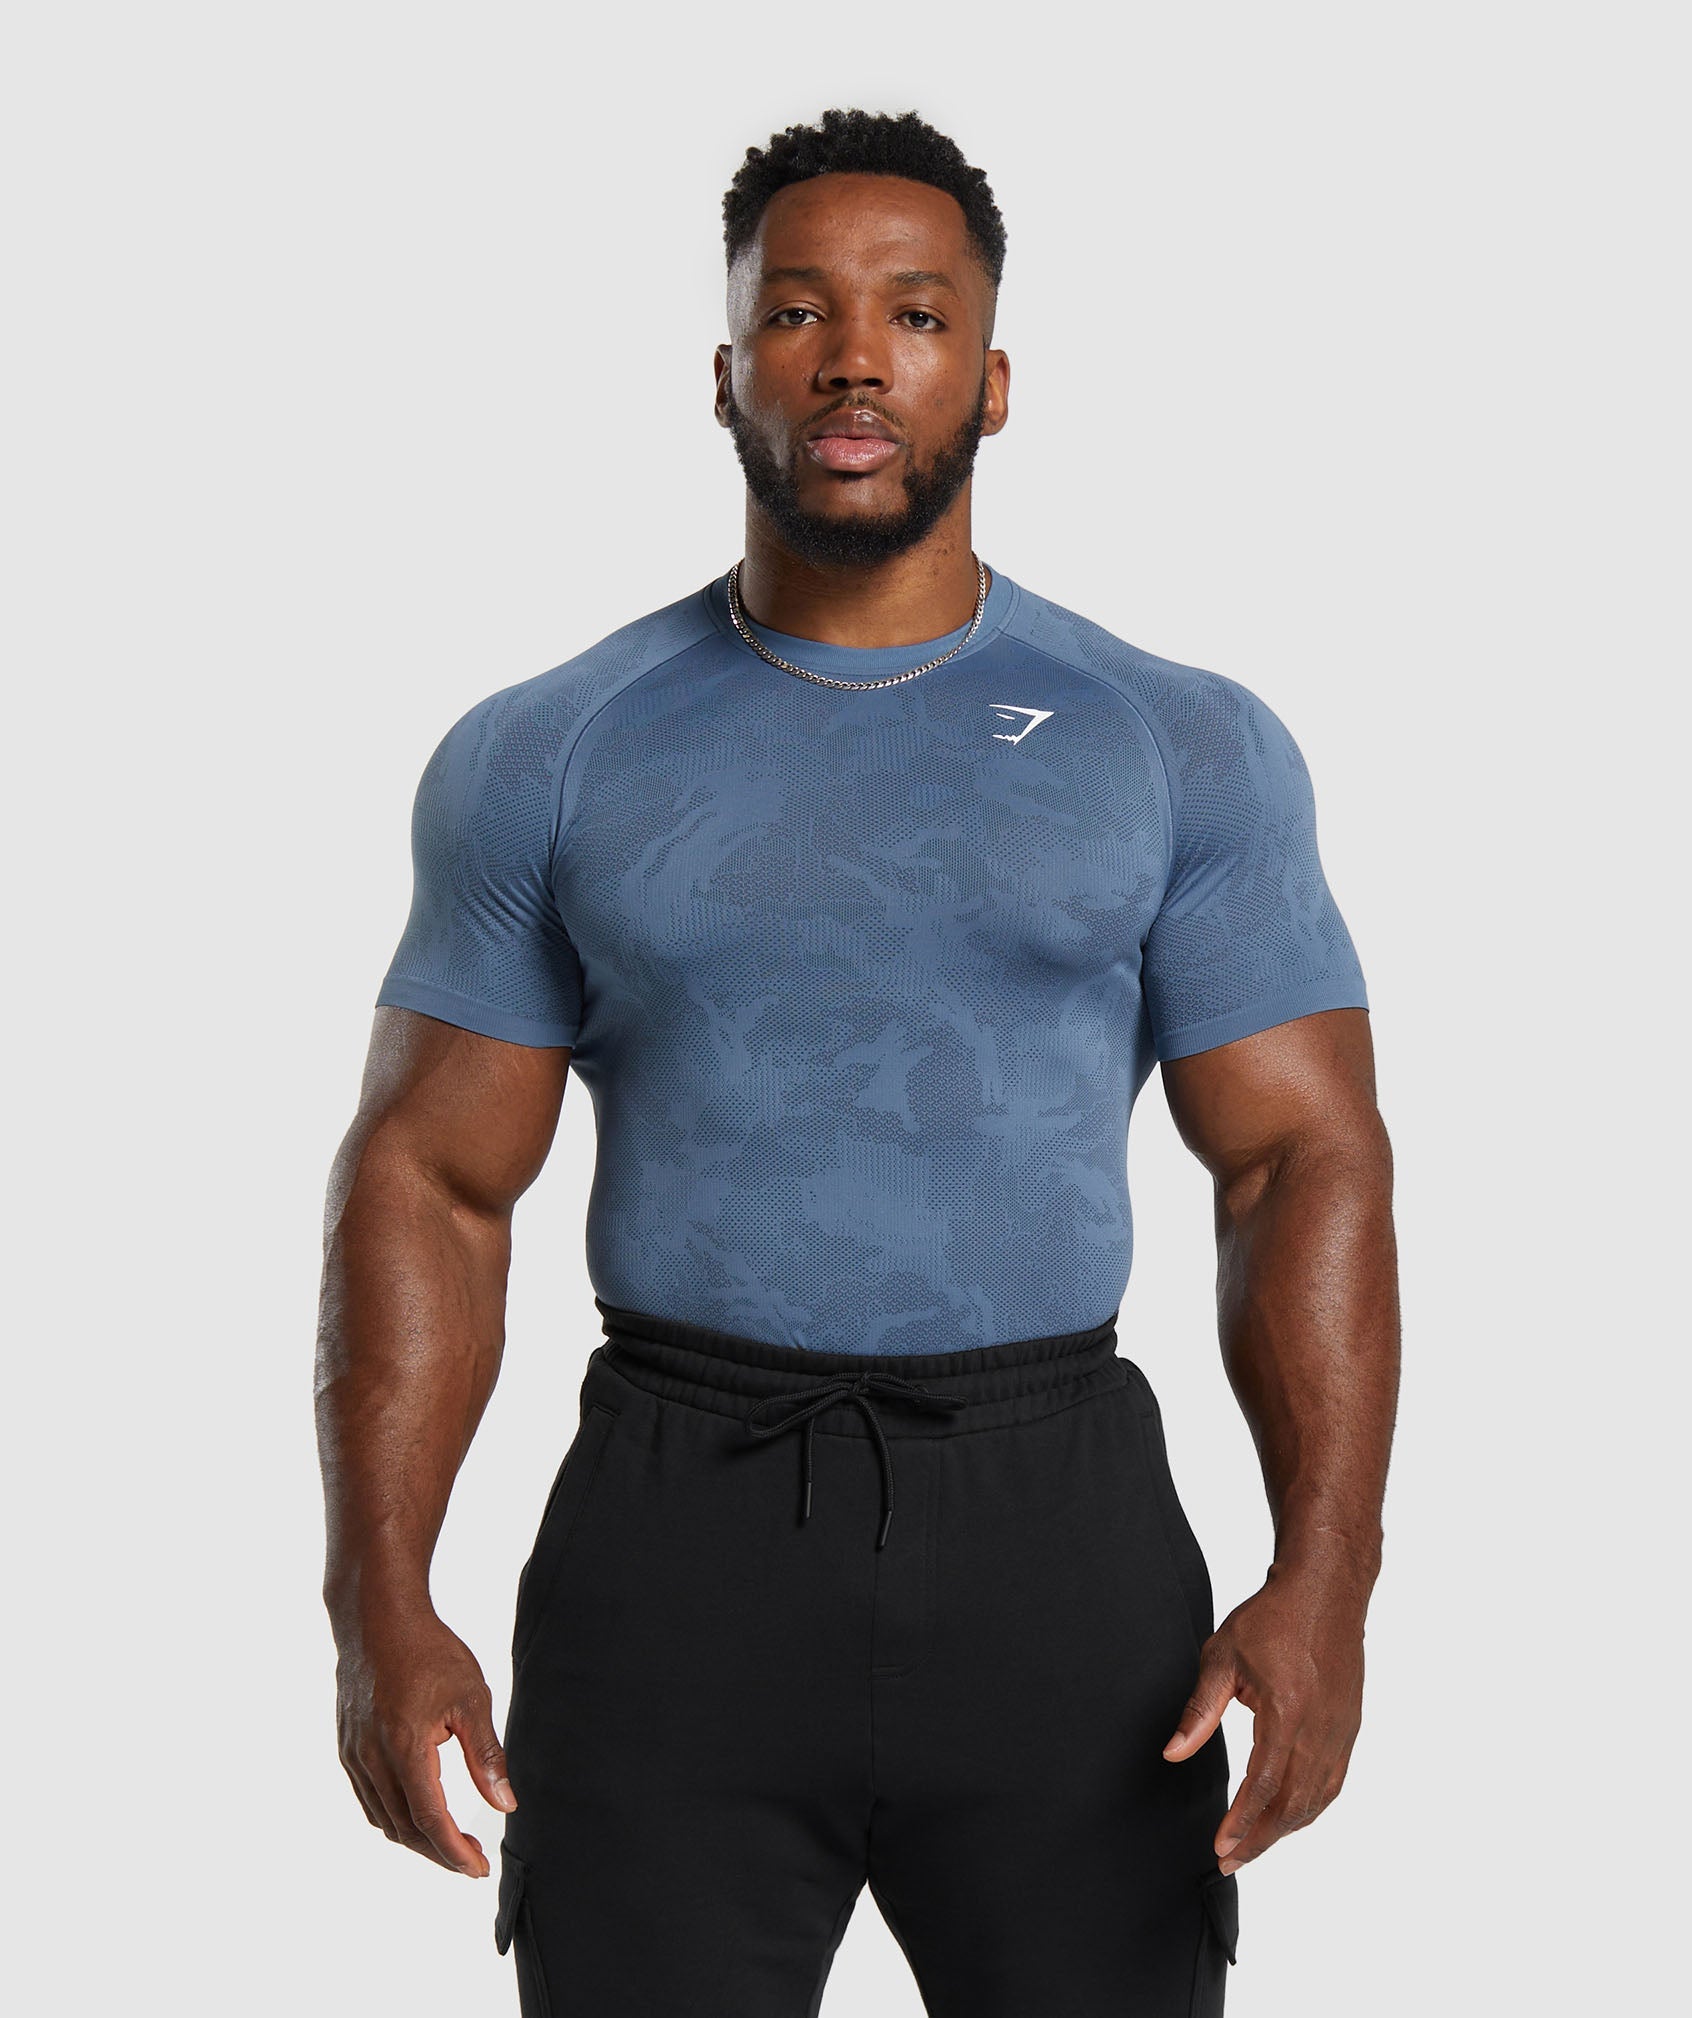 Gymshark Geo Seamless T-Shirt - Faded Blue/Titanium Blue